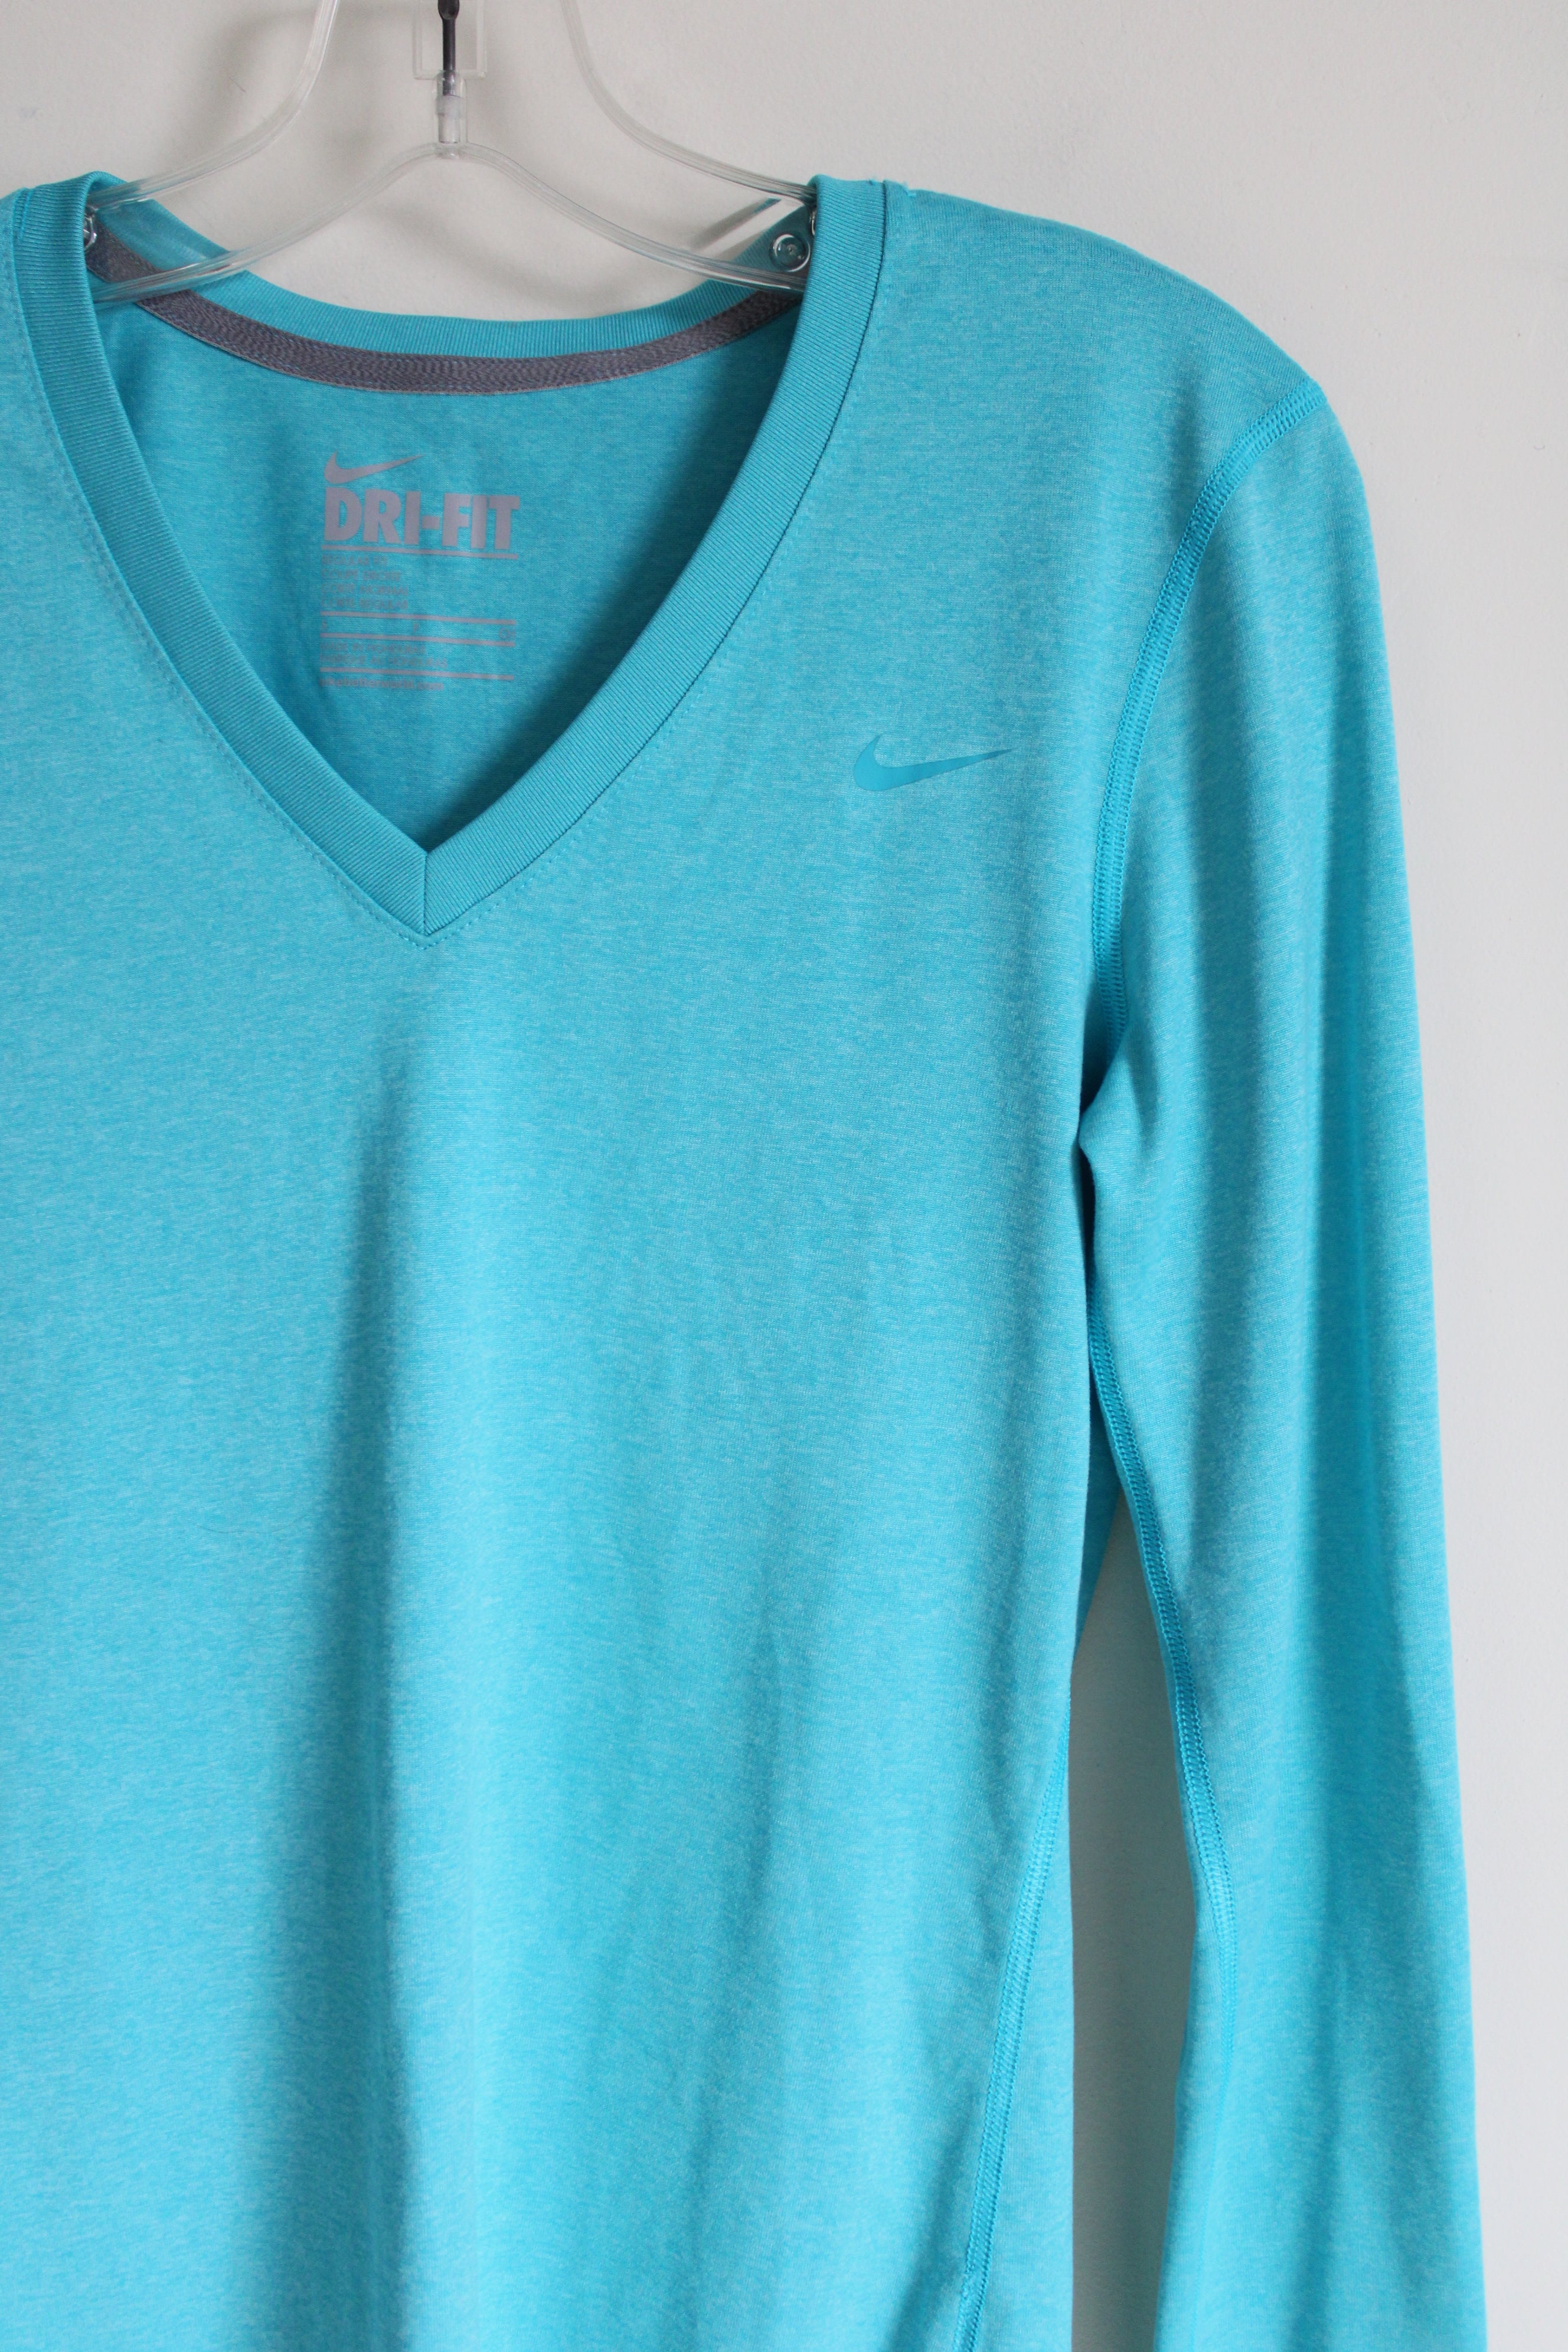 Nike Dri-Fit Blue Long Sleeved Shirt | S